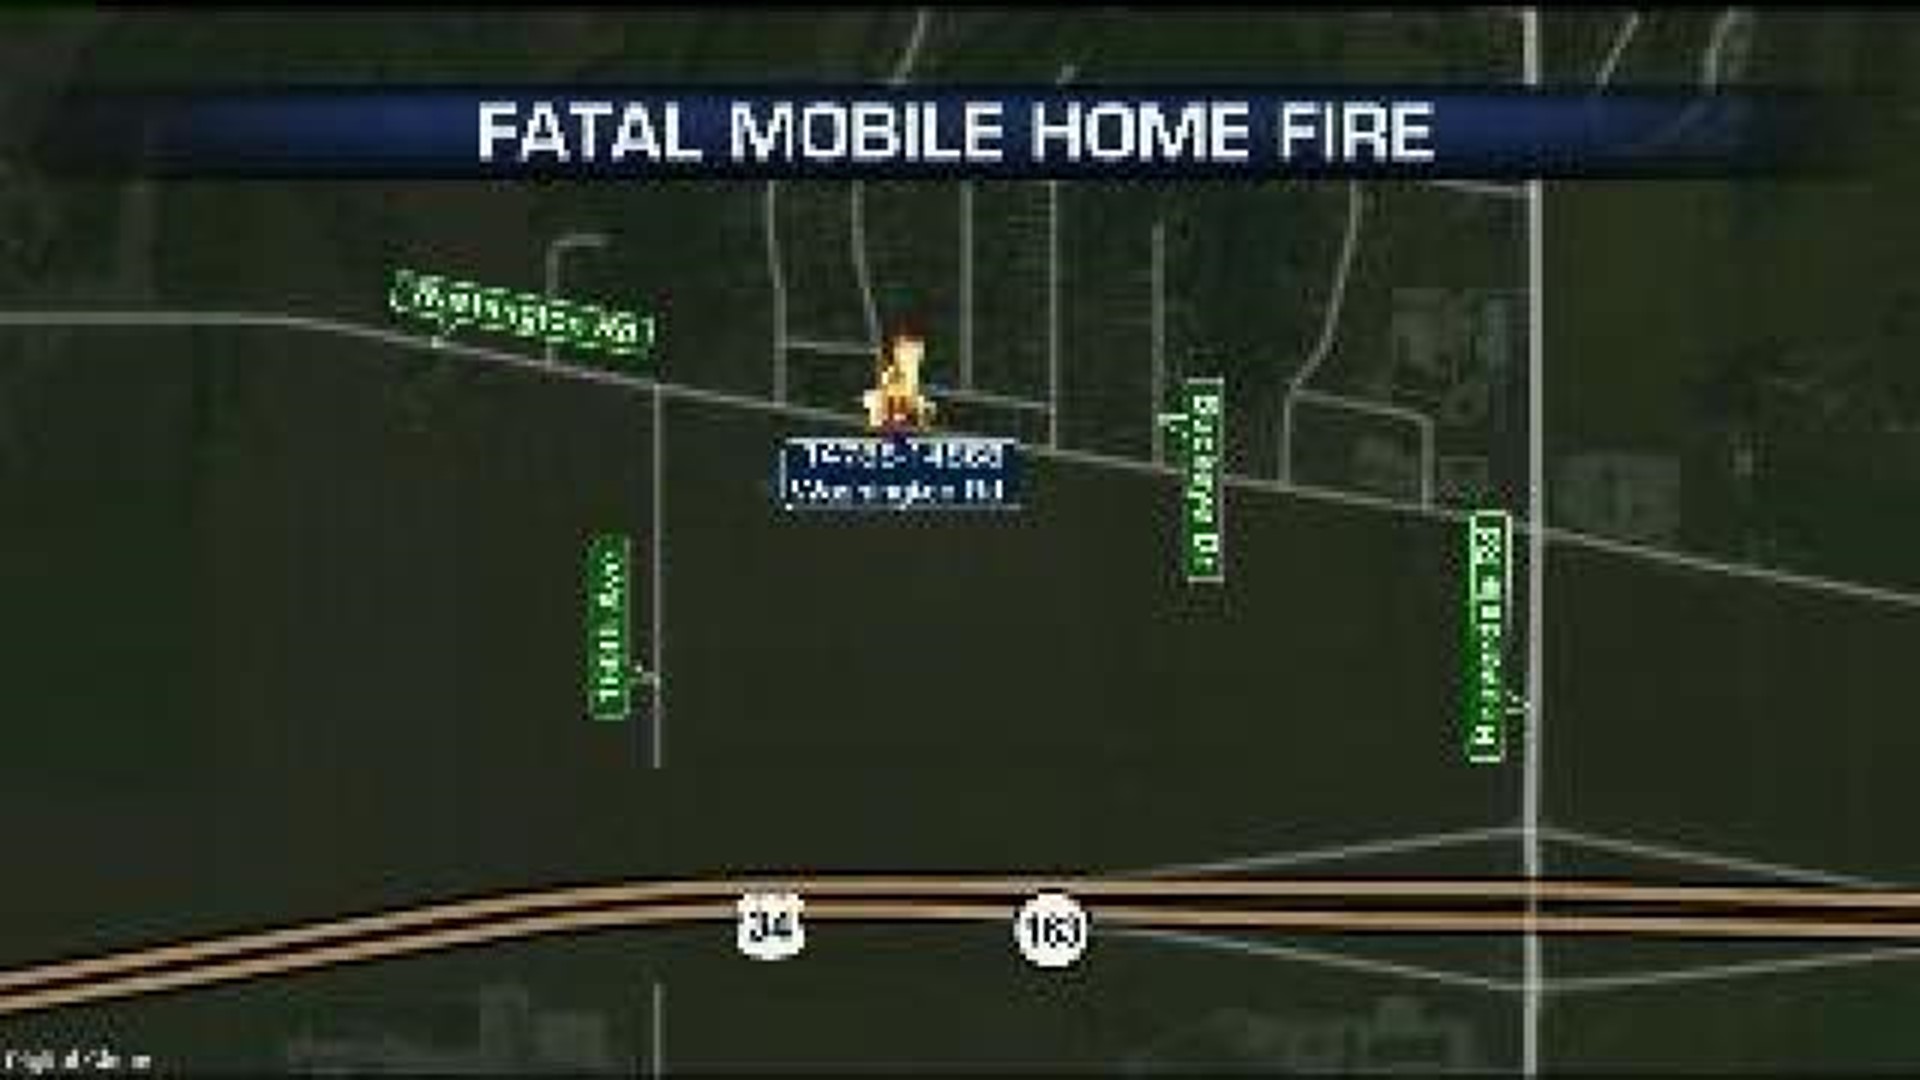 Man's body found inside burned mobile home